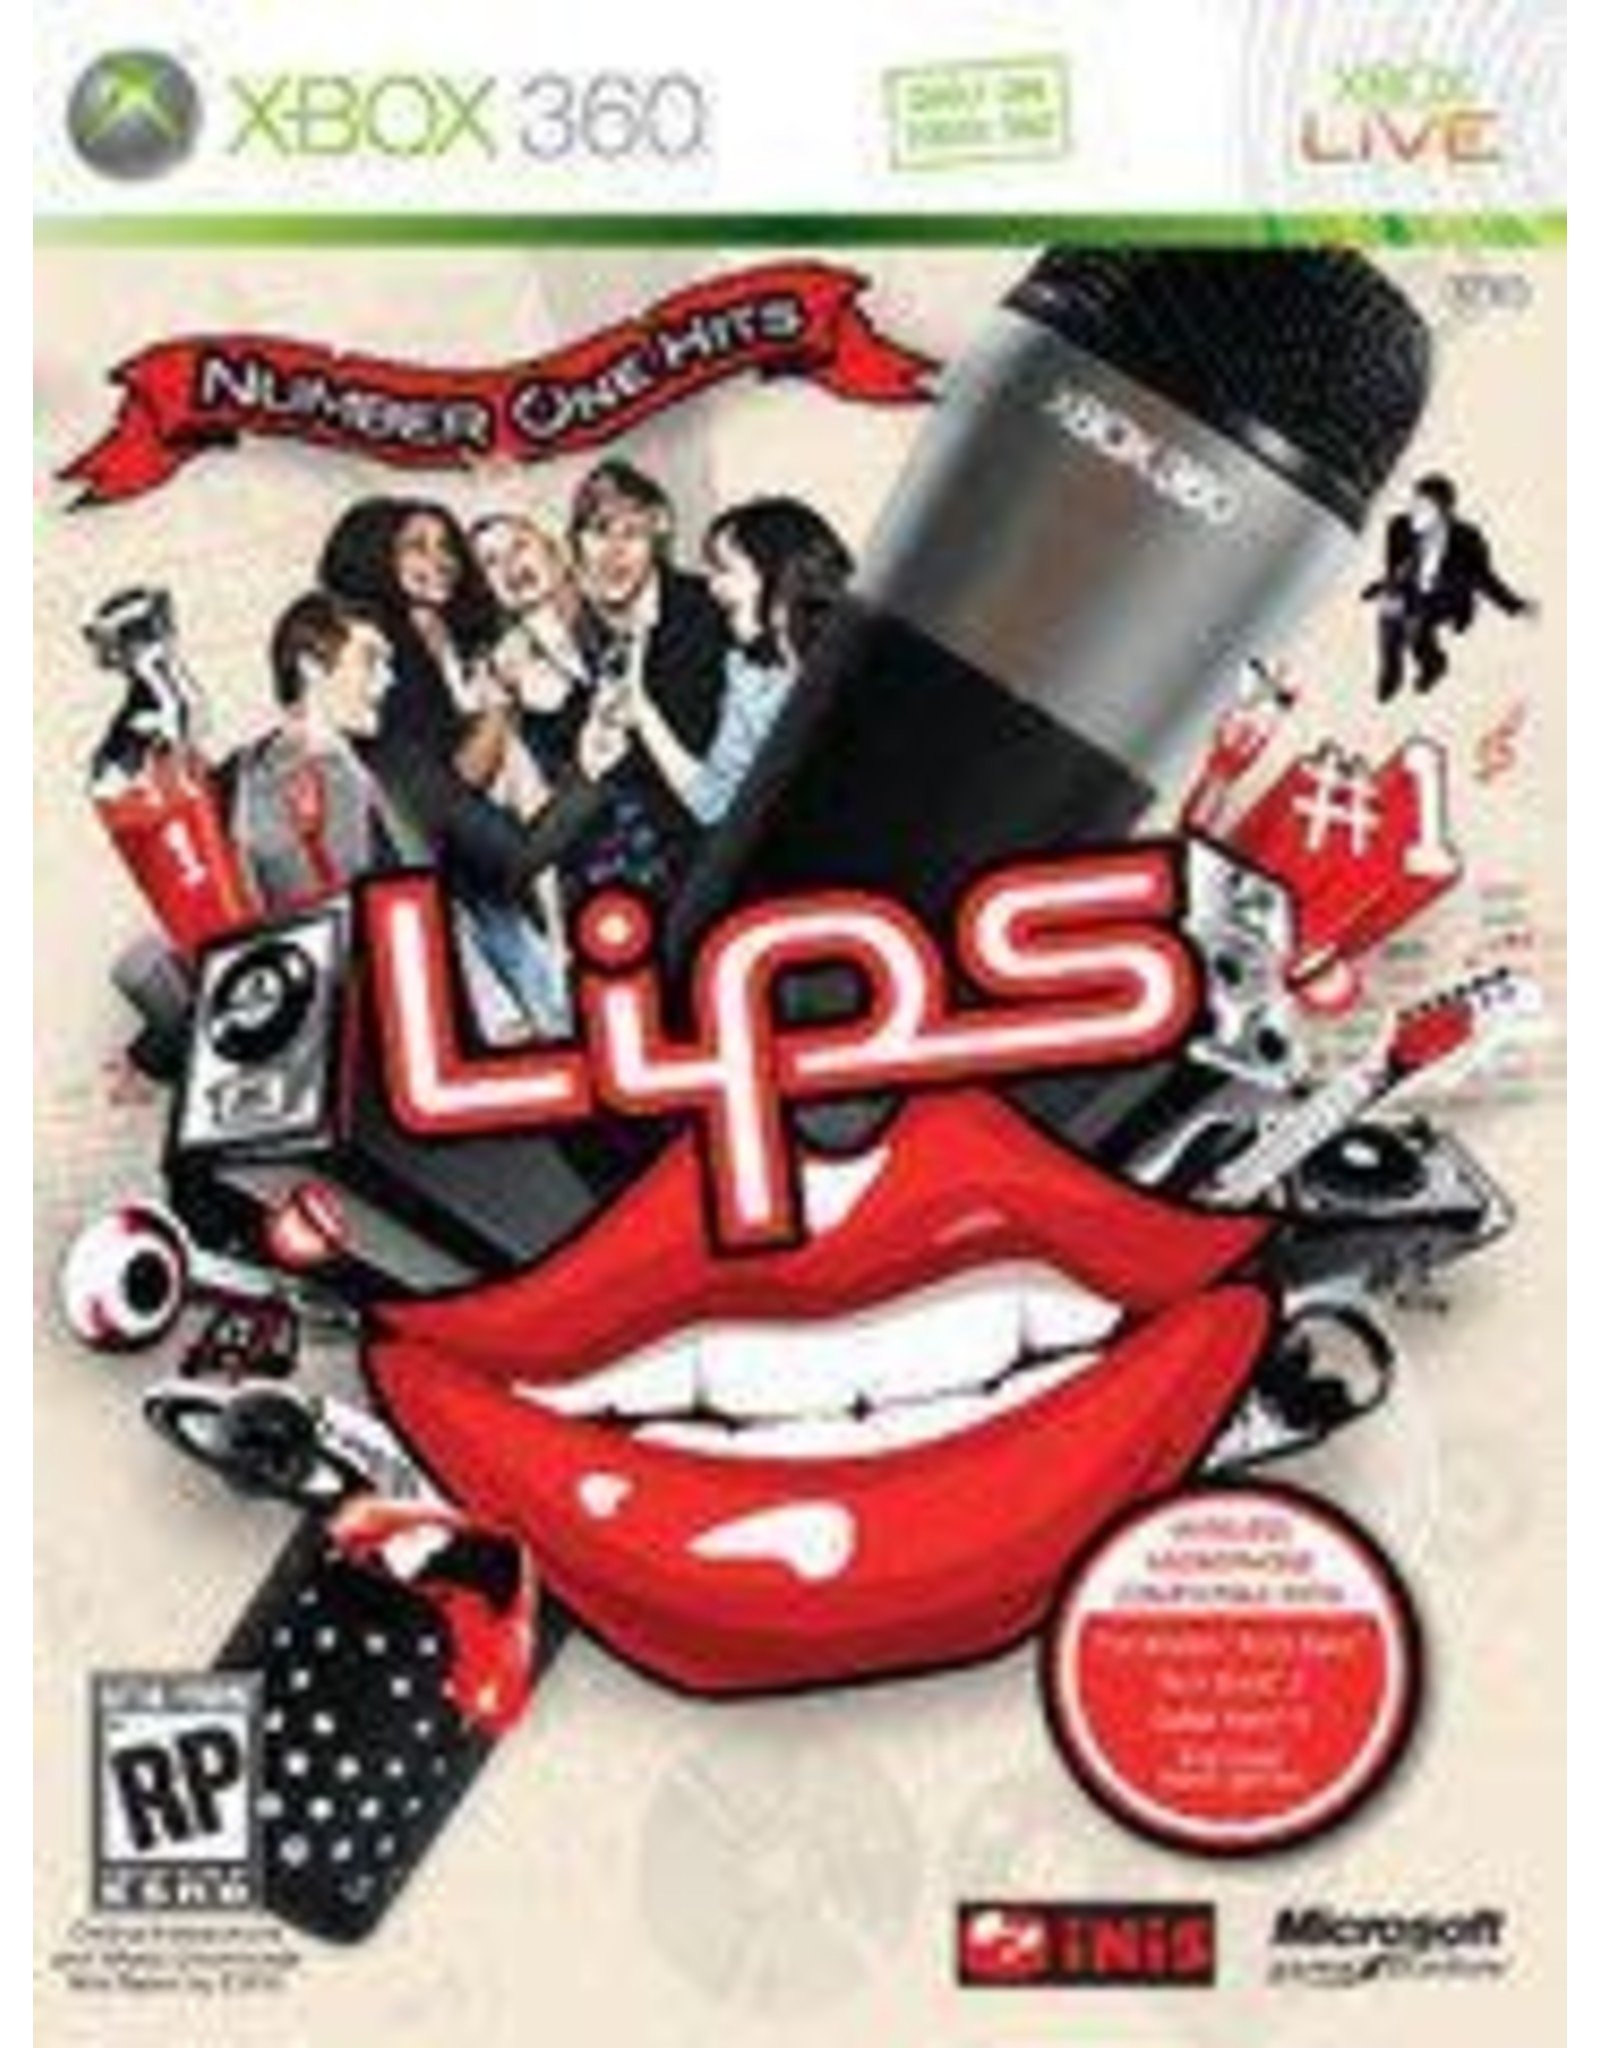 Xbox 360 Lips: Number One Hits (CiB)